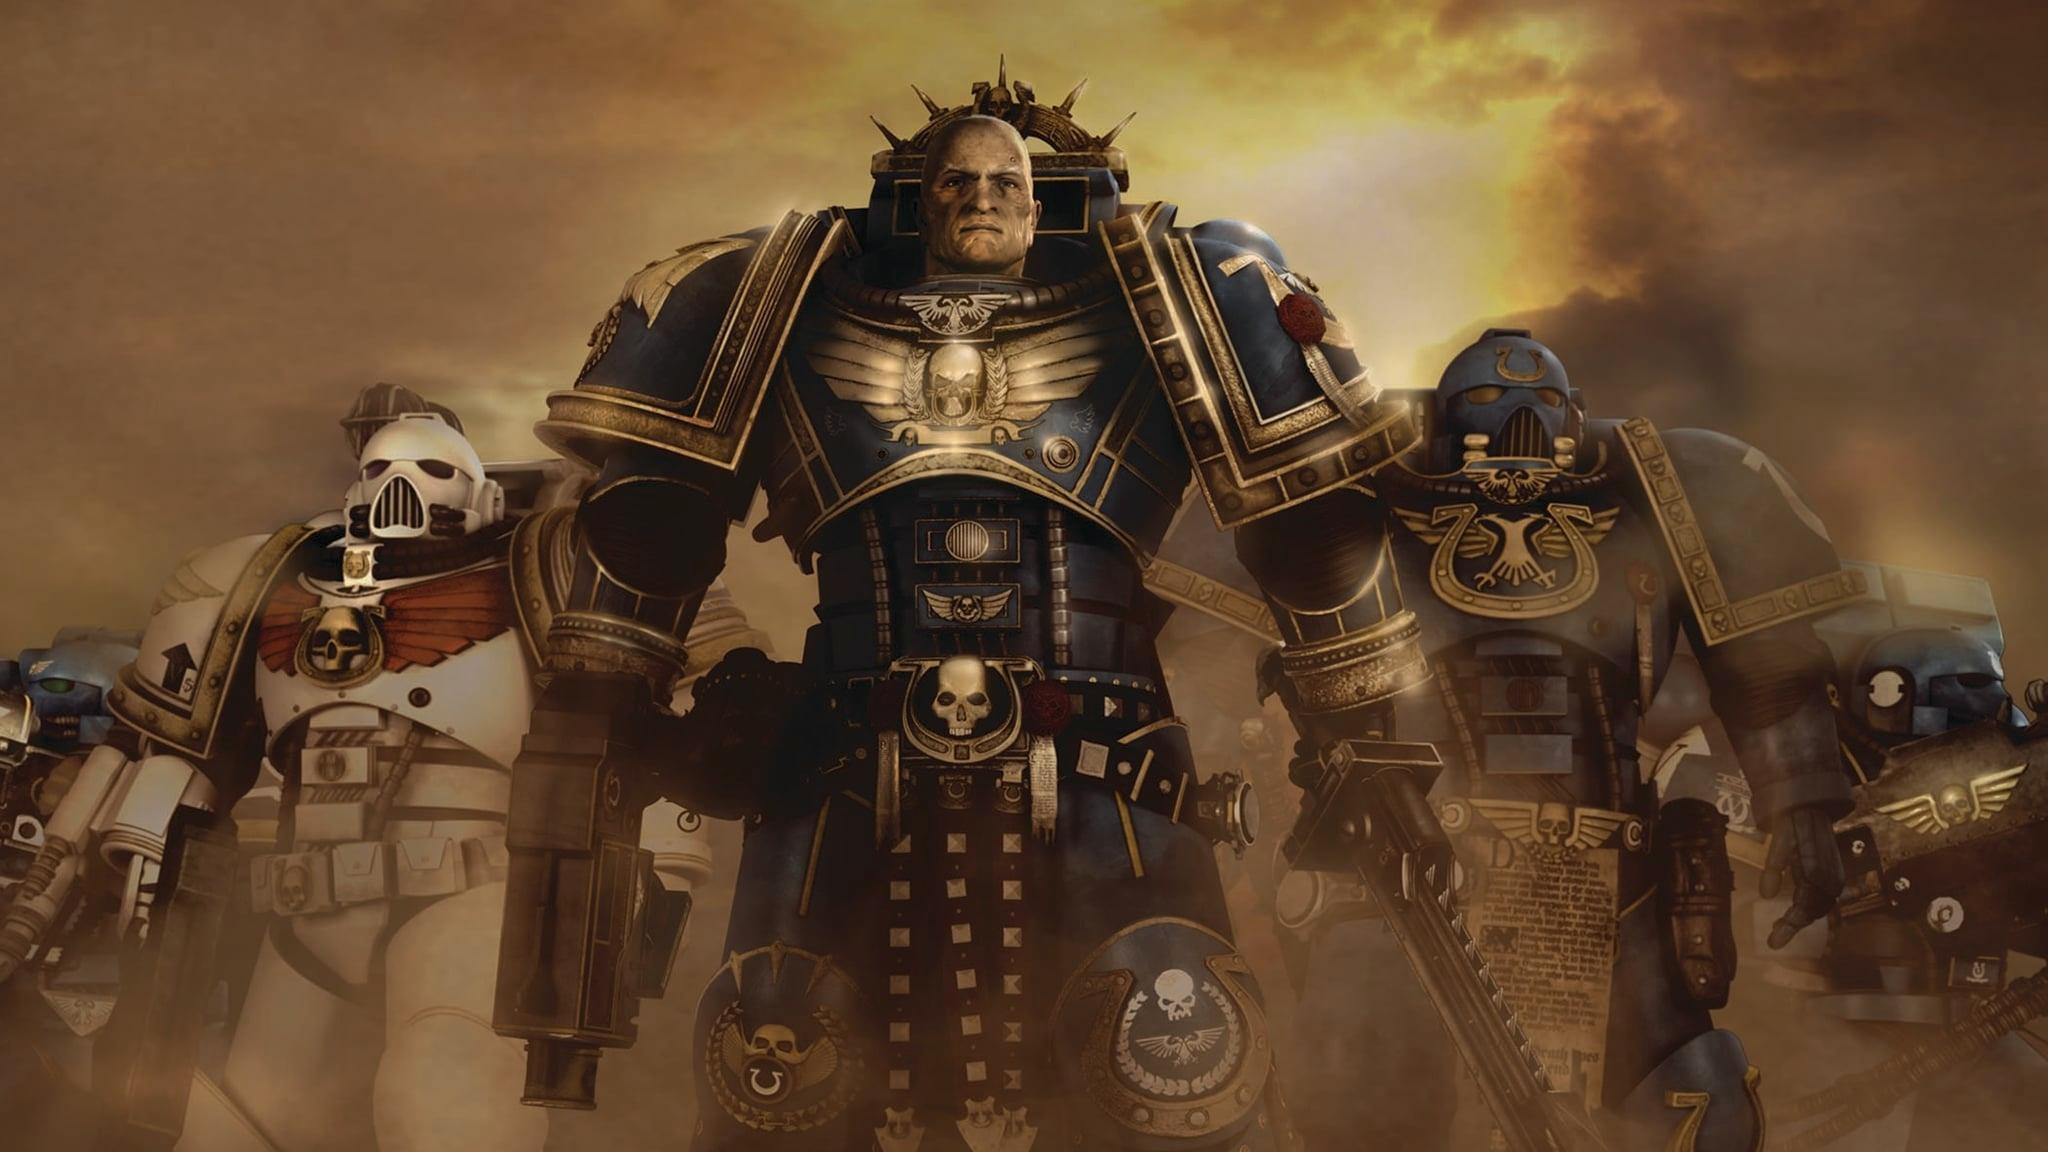 Ultramarines: A Warhammer 40,000 Movie backdrop